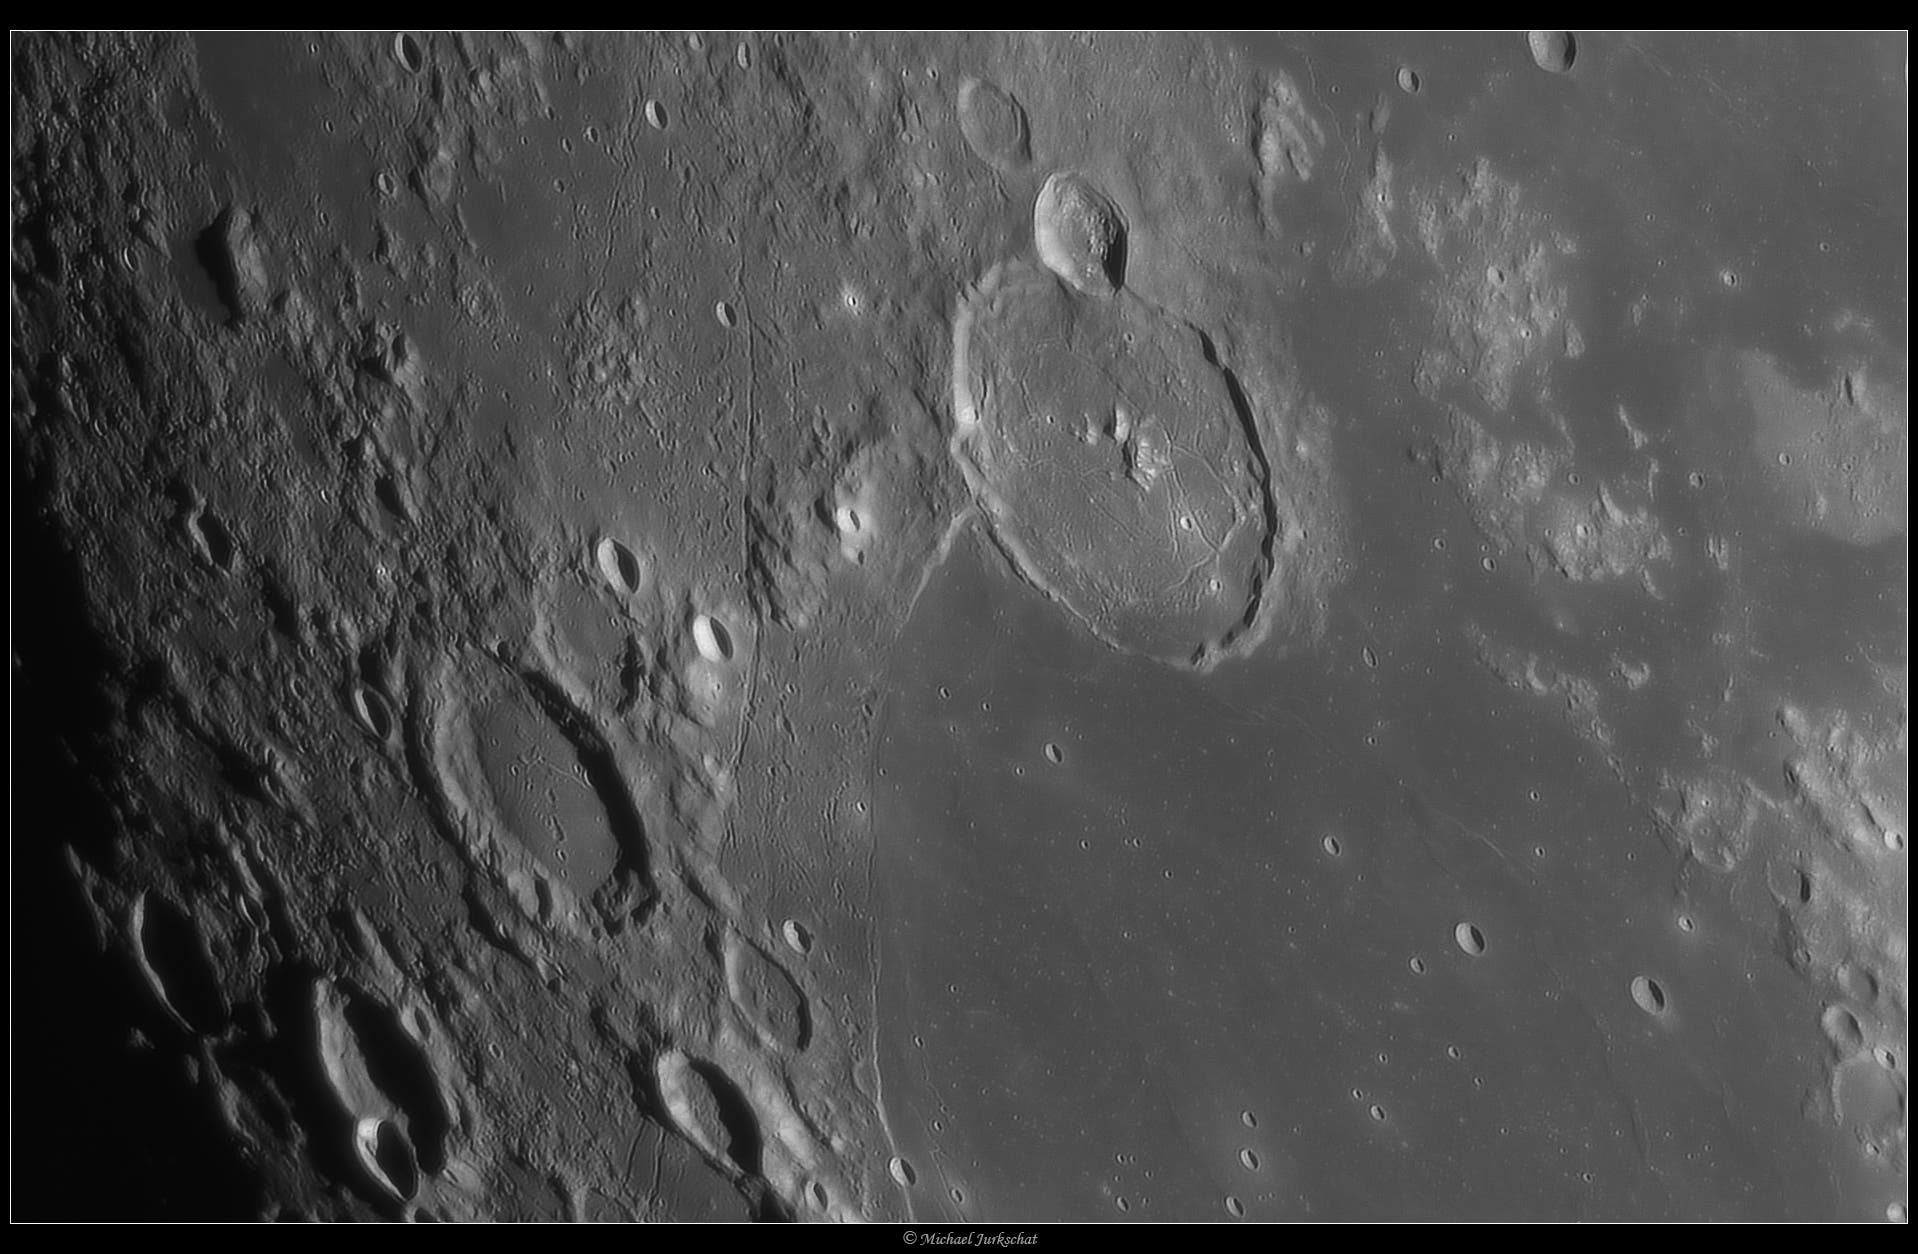 Gassendi-Krater